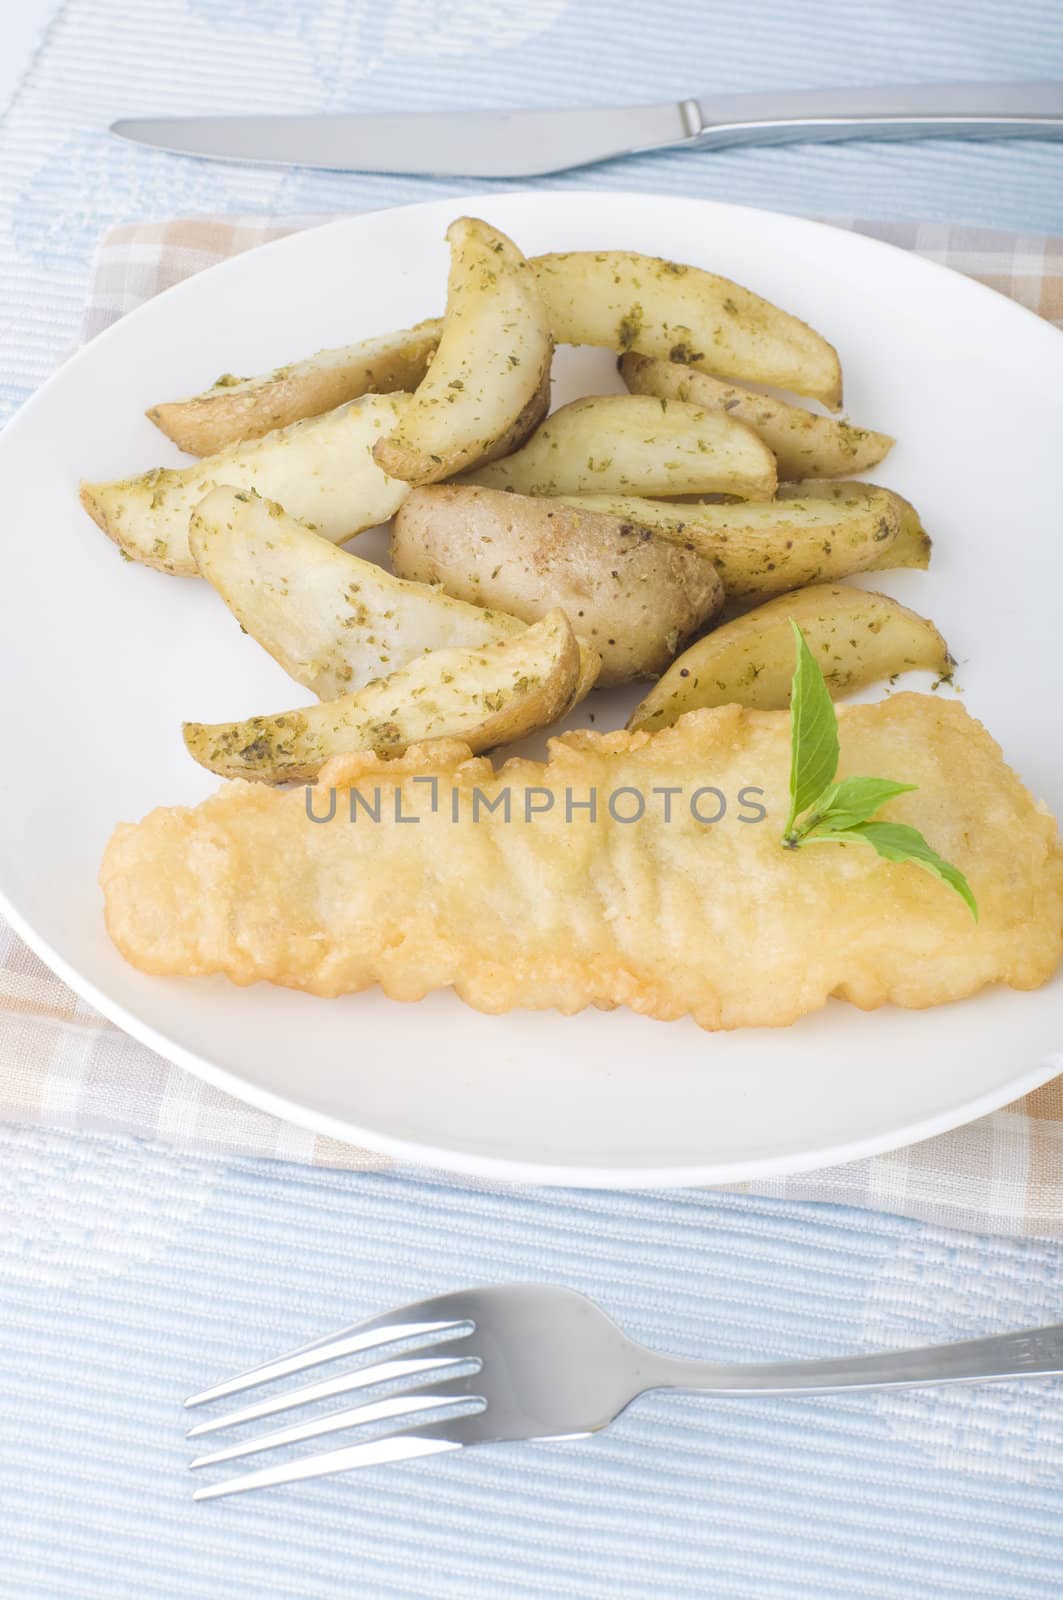 fish and chips by yuliang11